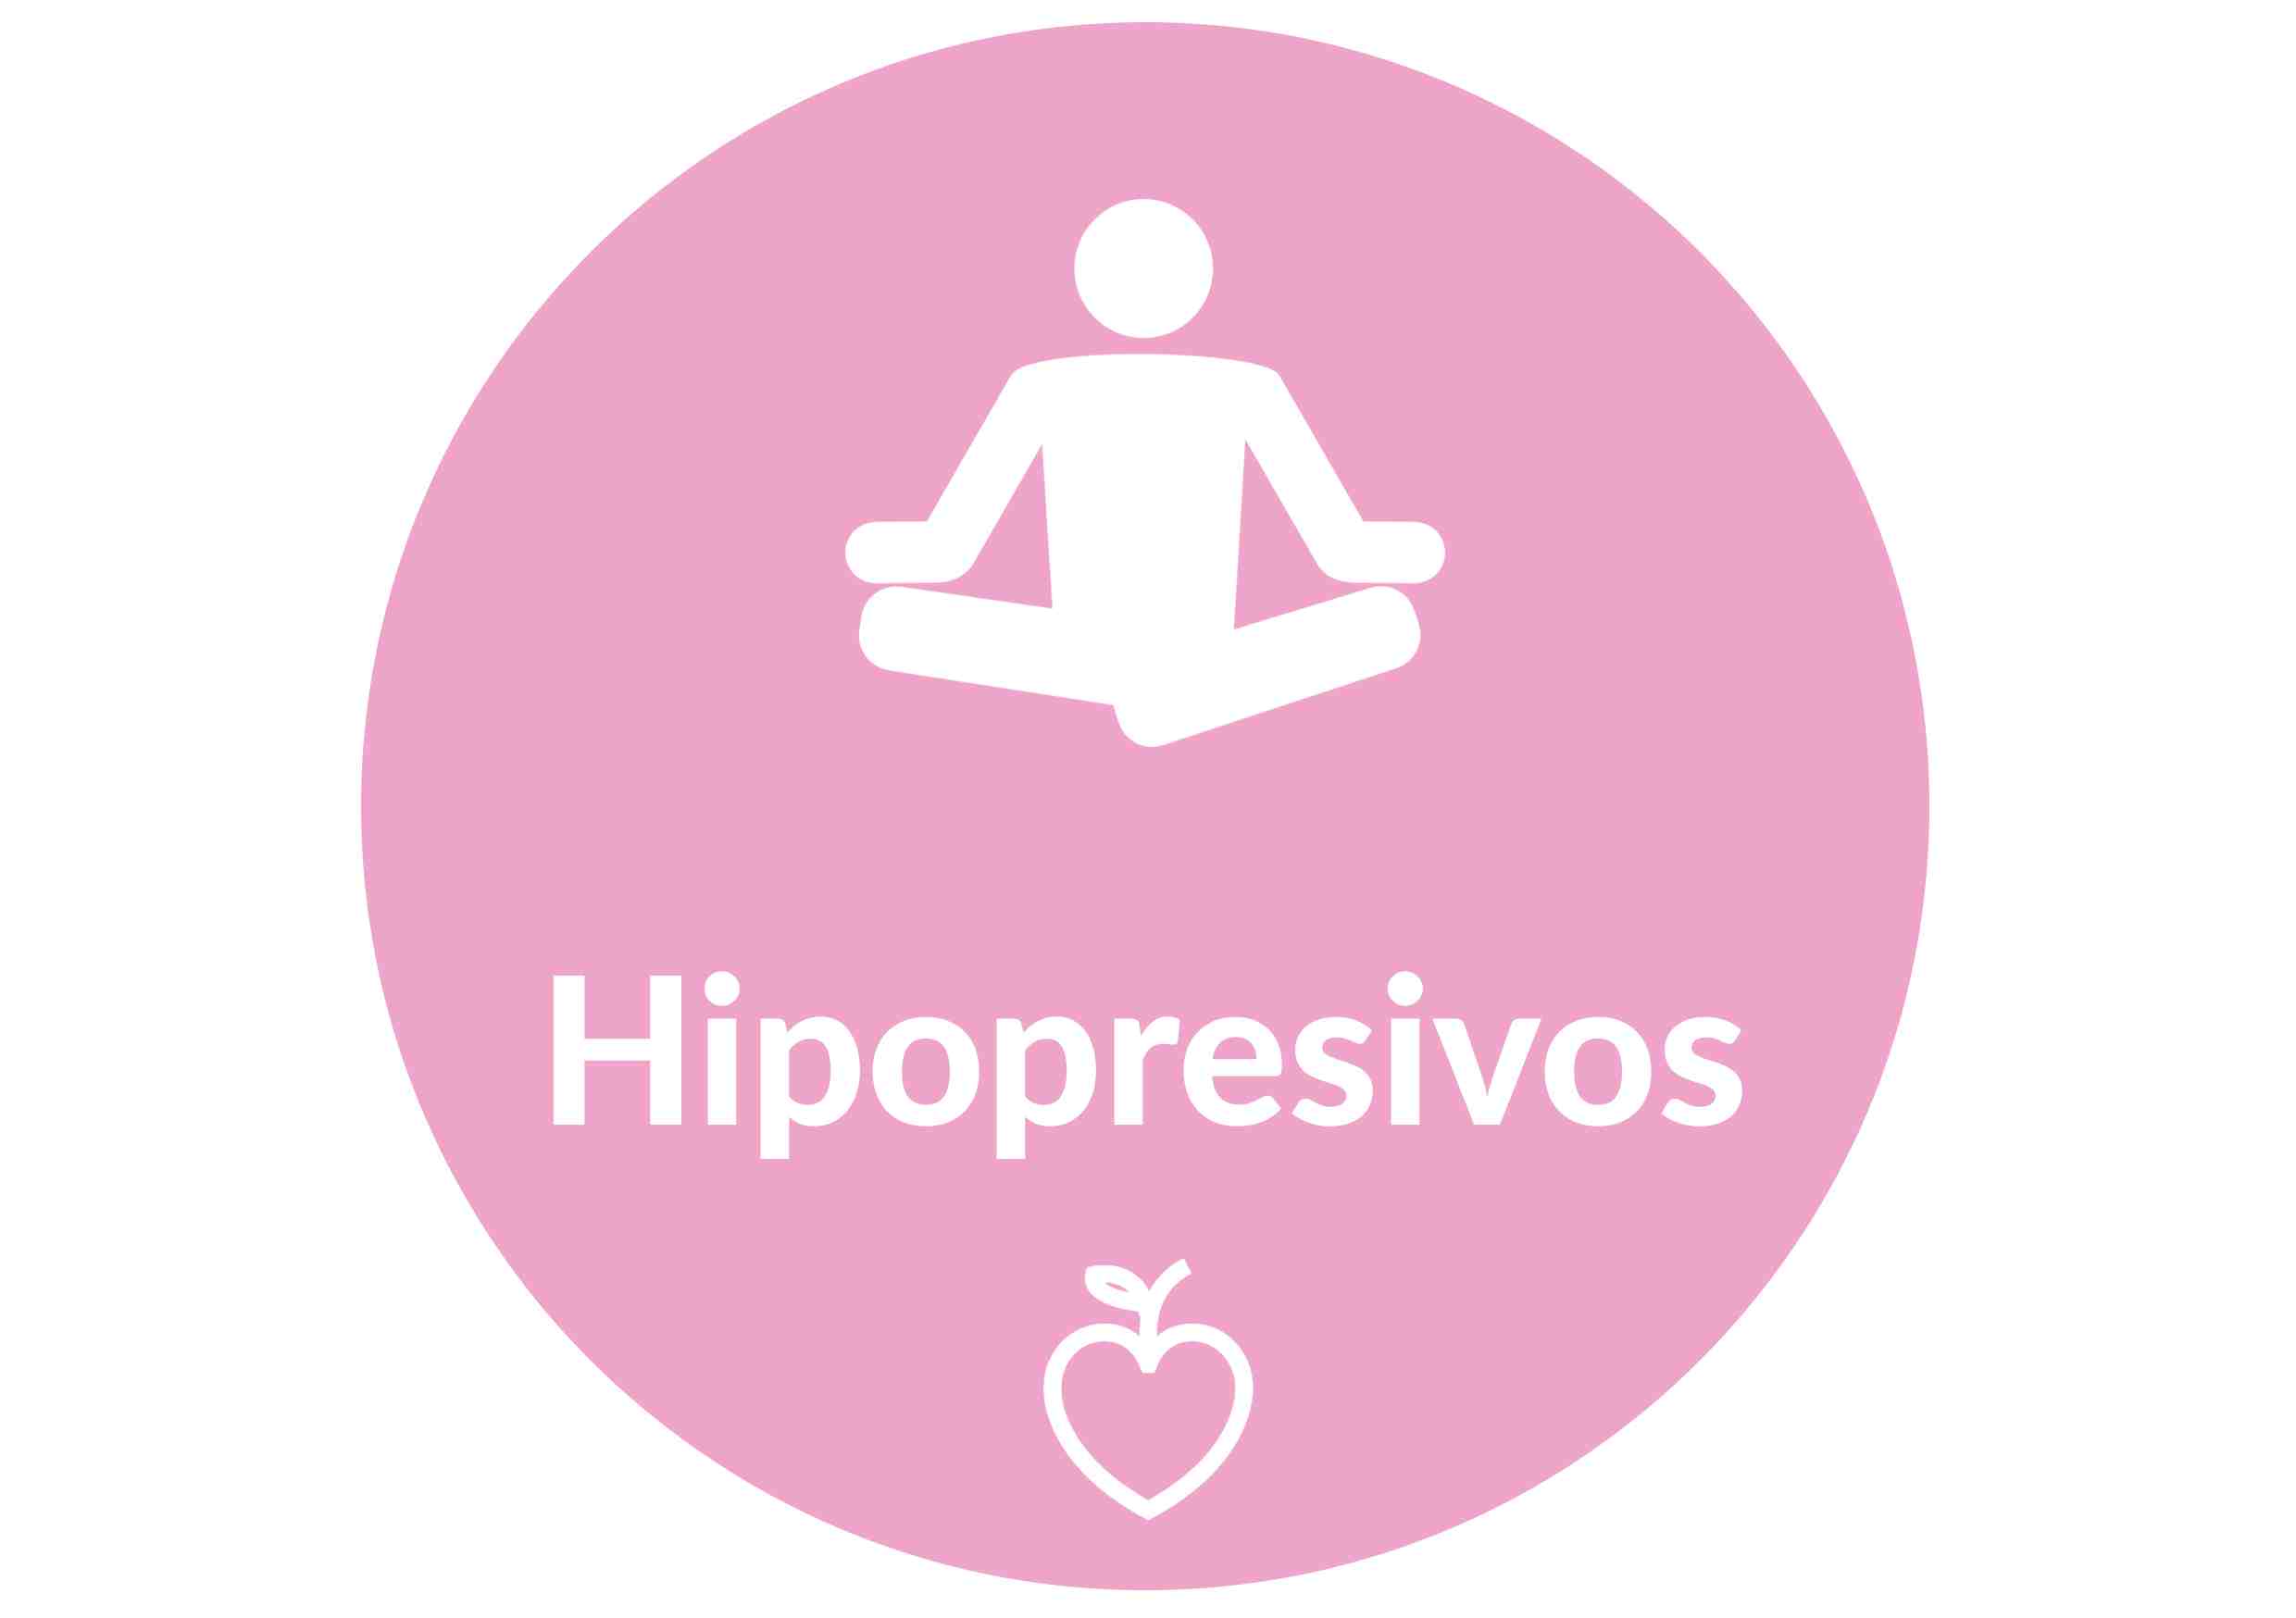 Hipopresivos beUp